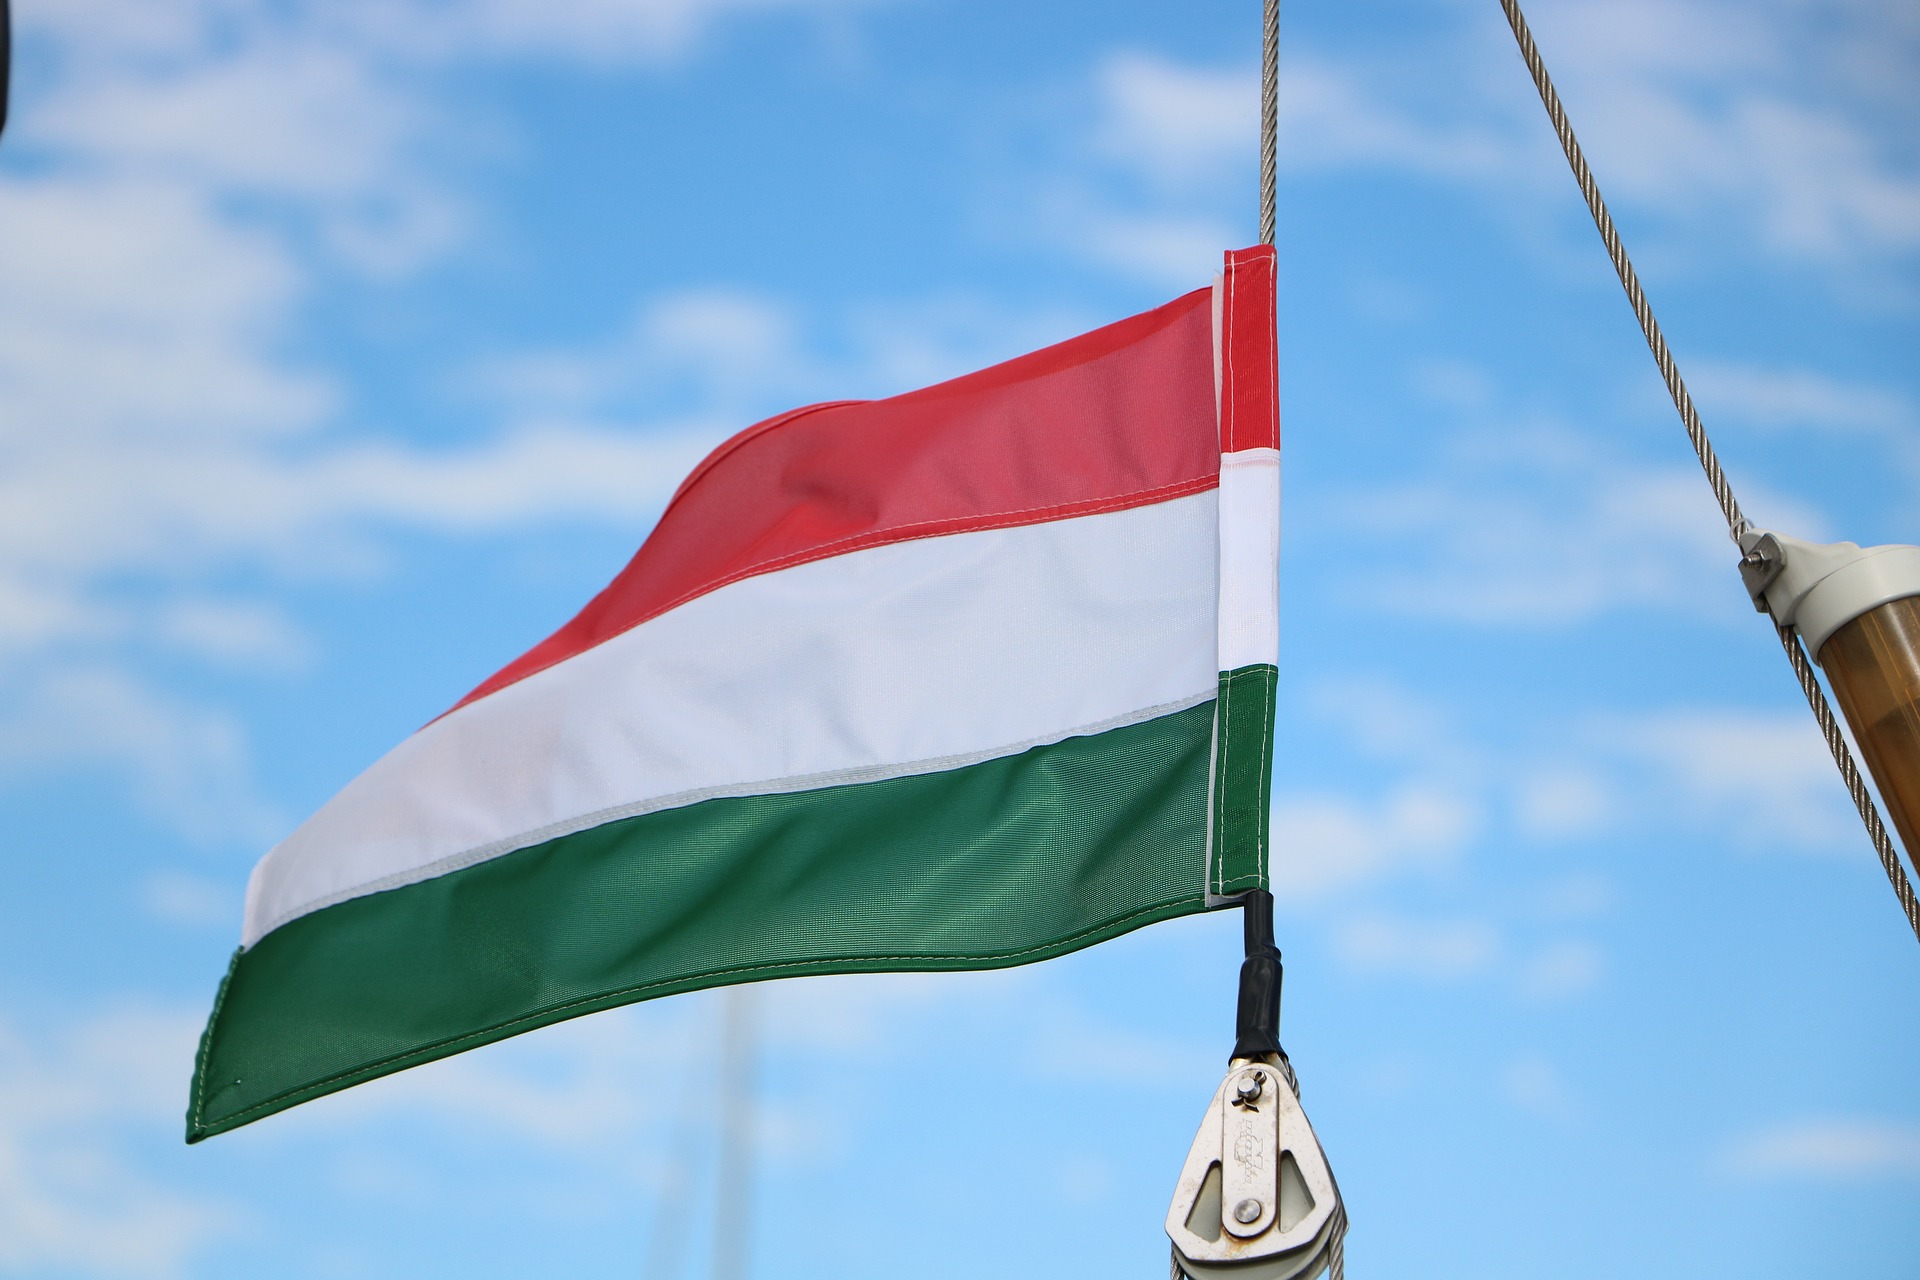 Steagul Ungariei